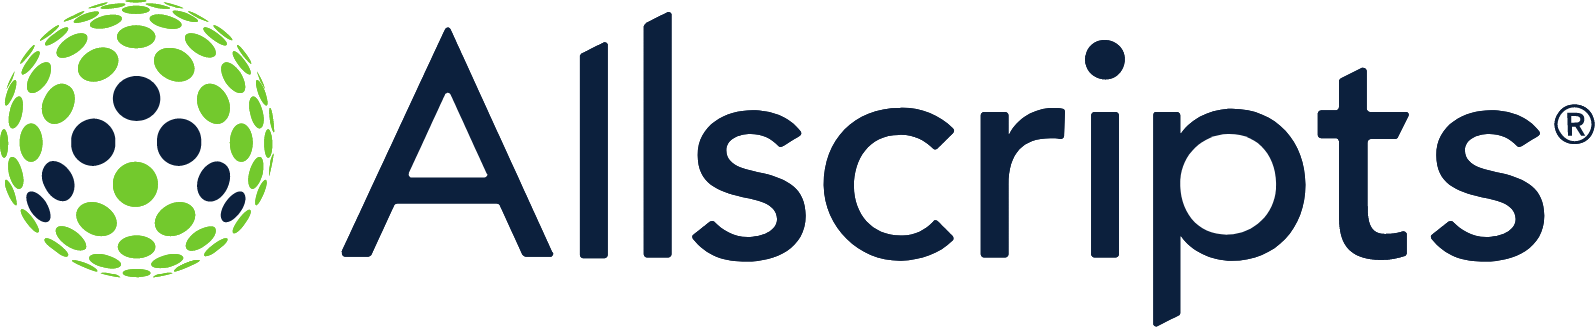 Allscripts logo large (transparent PNG)